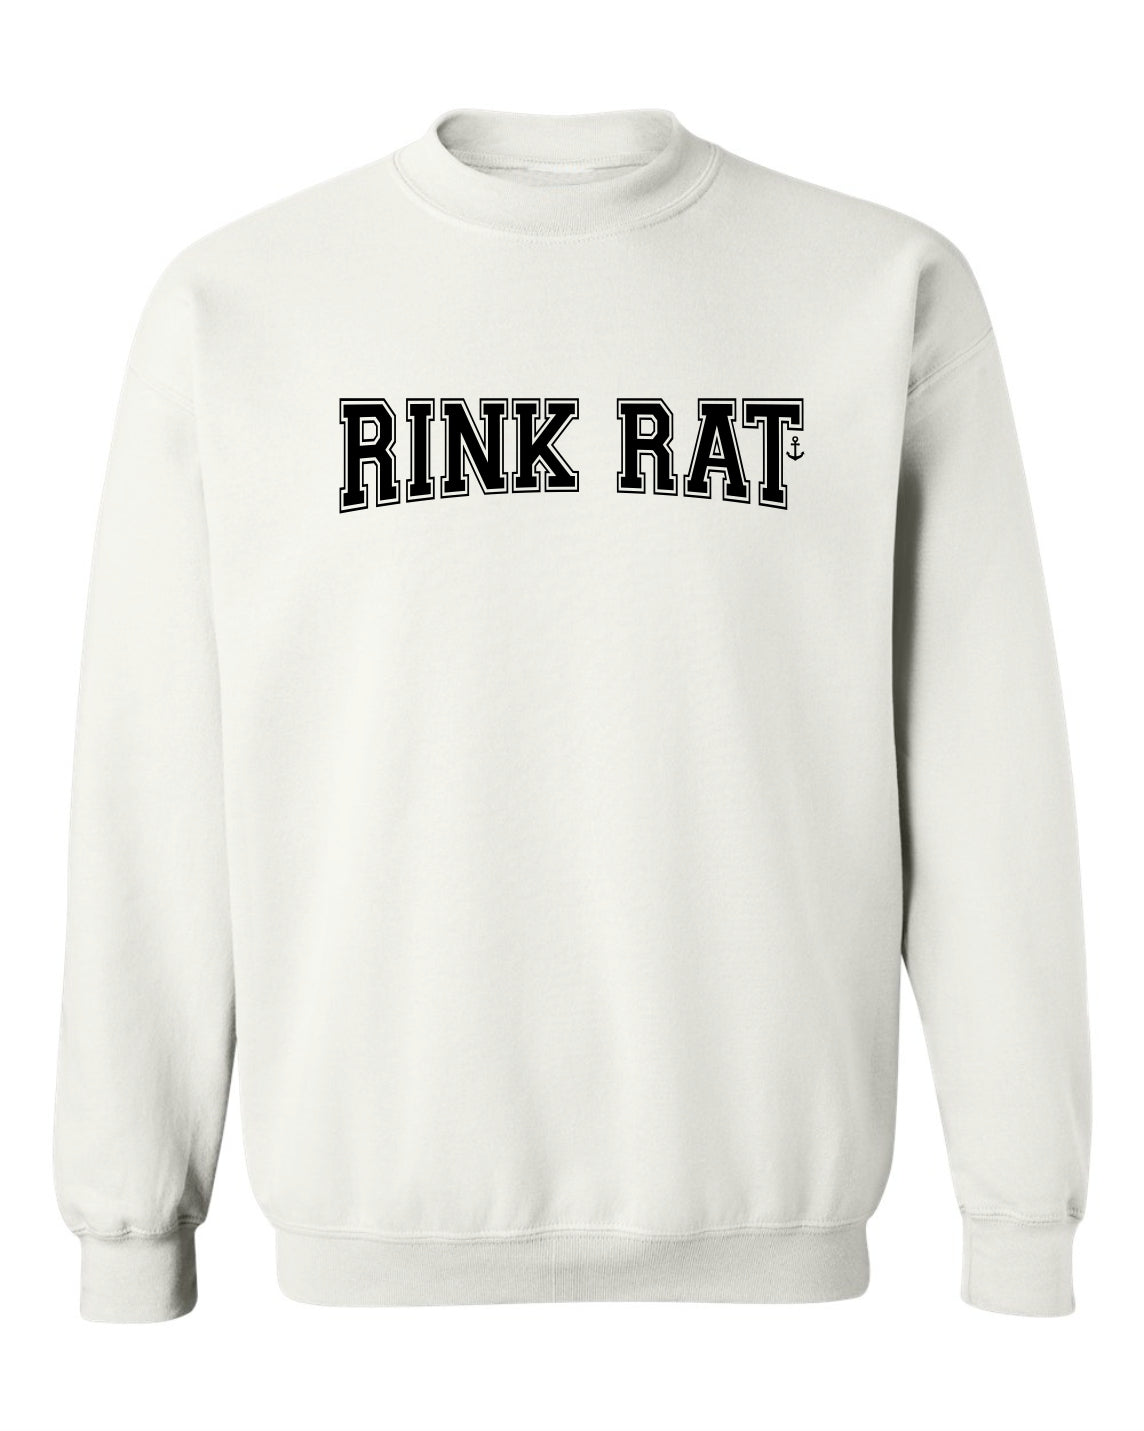 "Rink Rat” Unisex Crewneck Sweatshirt